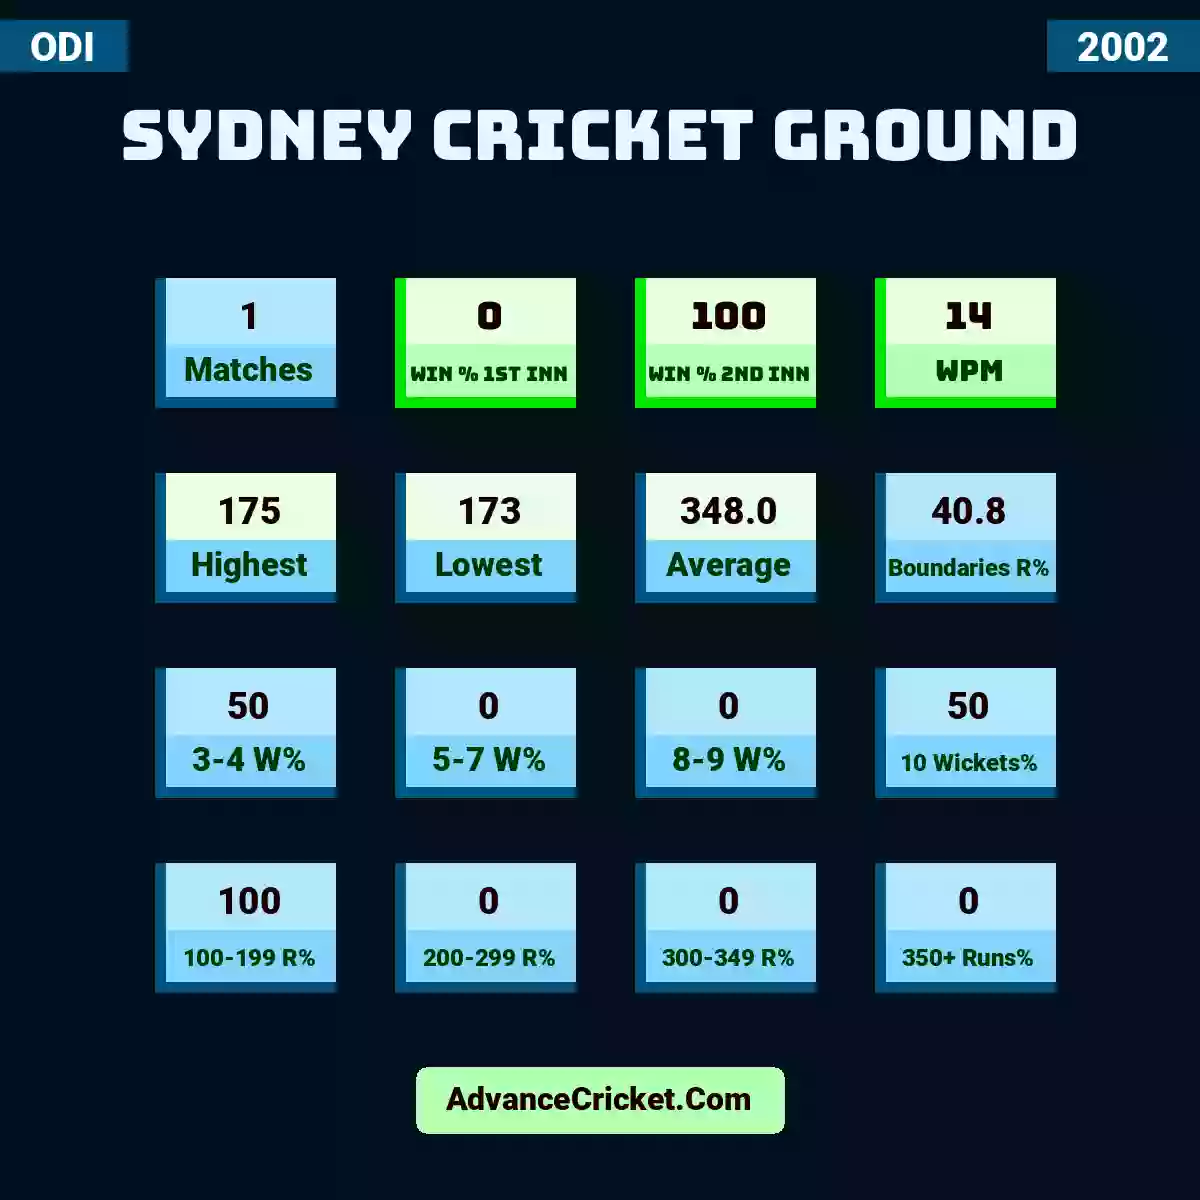 Image showing Sydney Cricket Ground with Matches: 1, Win % 1st Inn: 0, Win % 2nd Inn: 100, WPM: 14, Highest: 175, Lowest: 173, Average: 348.0, Boundaries R%: 40.8, 3-4 W%: 50, 5-7 W%: 0, 8-9 W%: 0, 10 Wickets%: 50, 100-199 R%: 100, 200-299 R%: 0, 300-349 R%: 0, 350+ Runs%: 0.